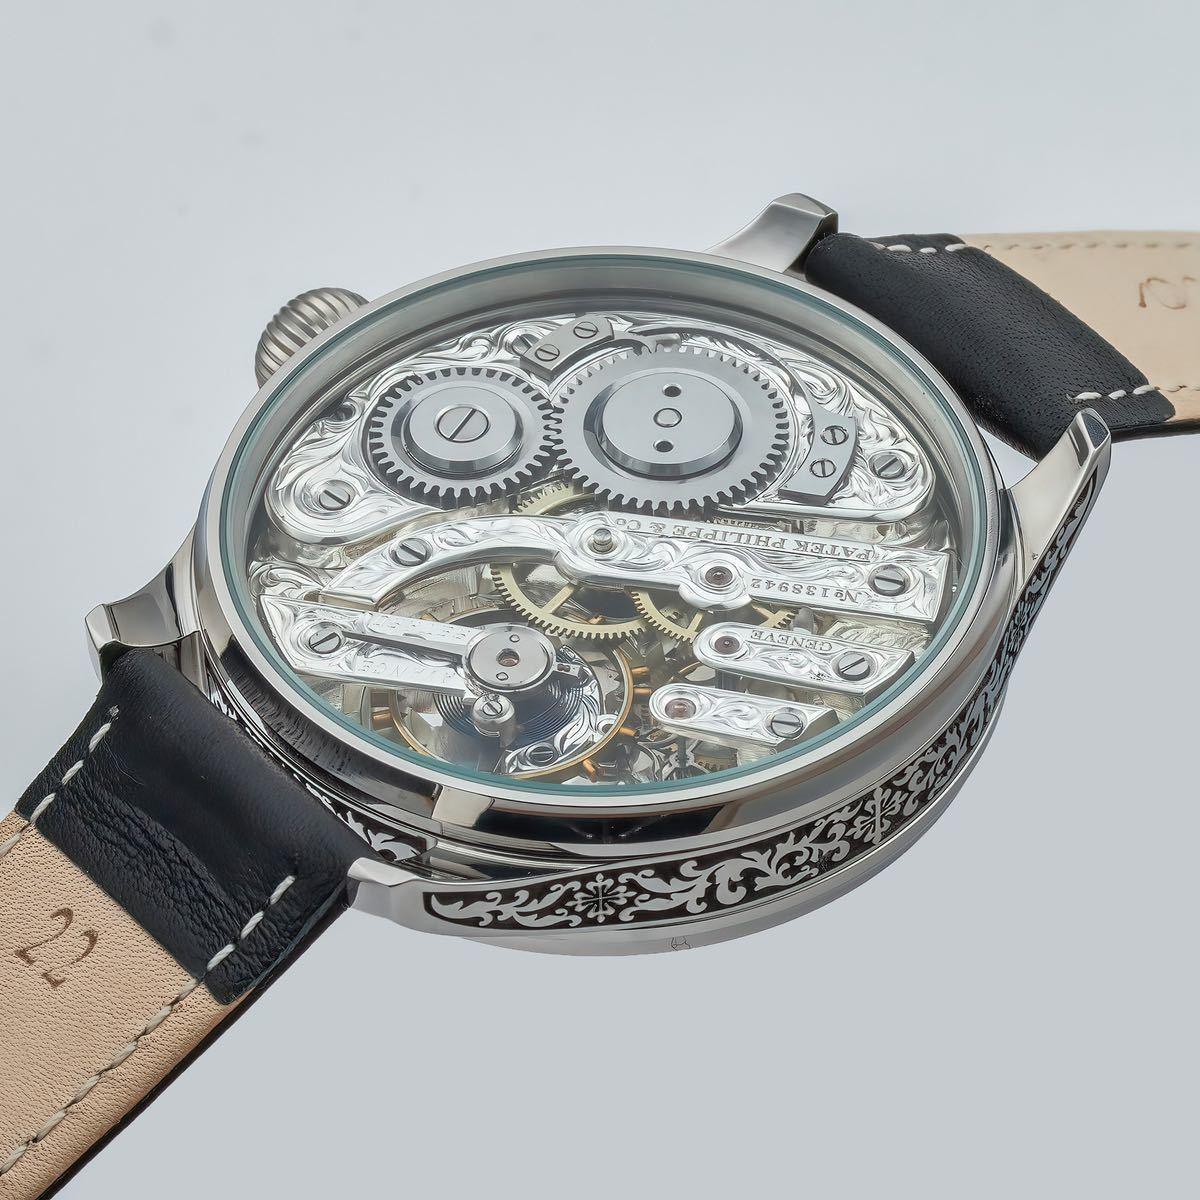 Patek Philippe Pocket Watch Modded Wristwatch 48mm Silver Dial Vintage - Murphy Johnson Watches Co.